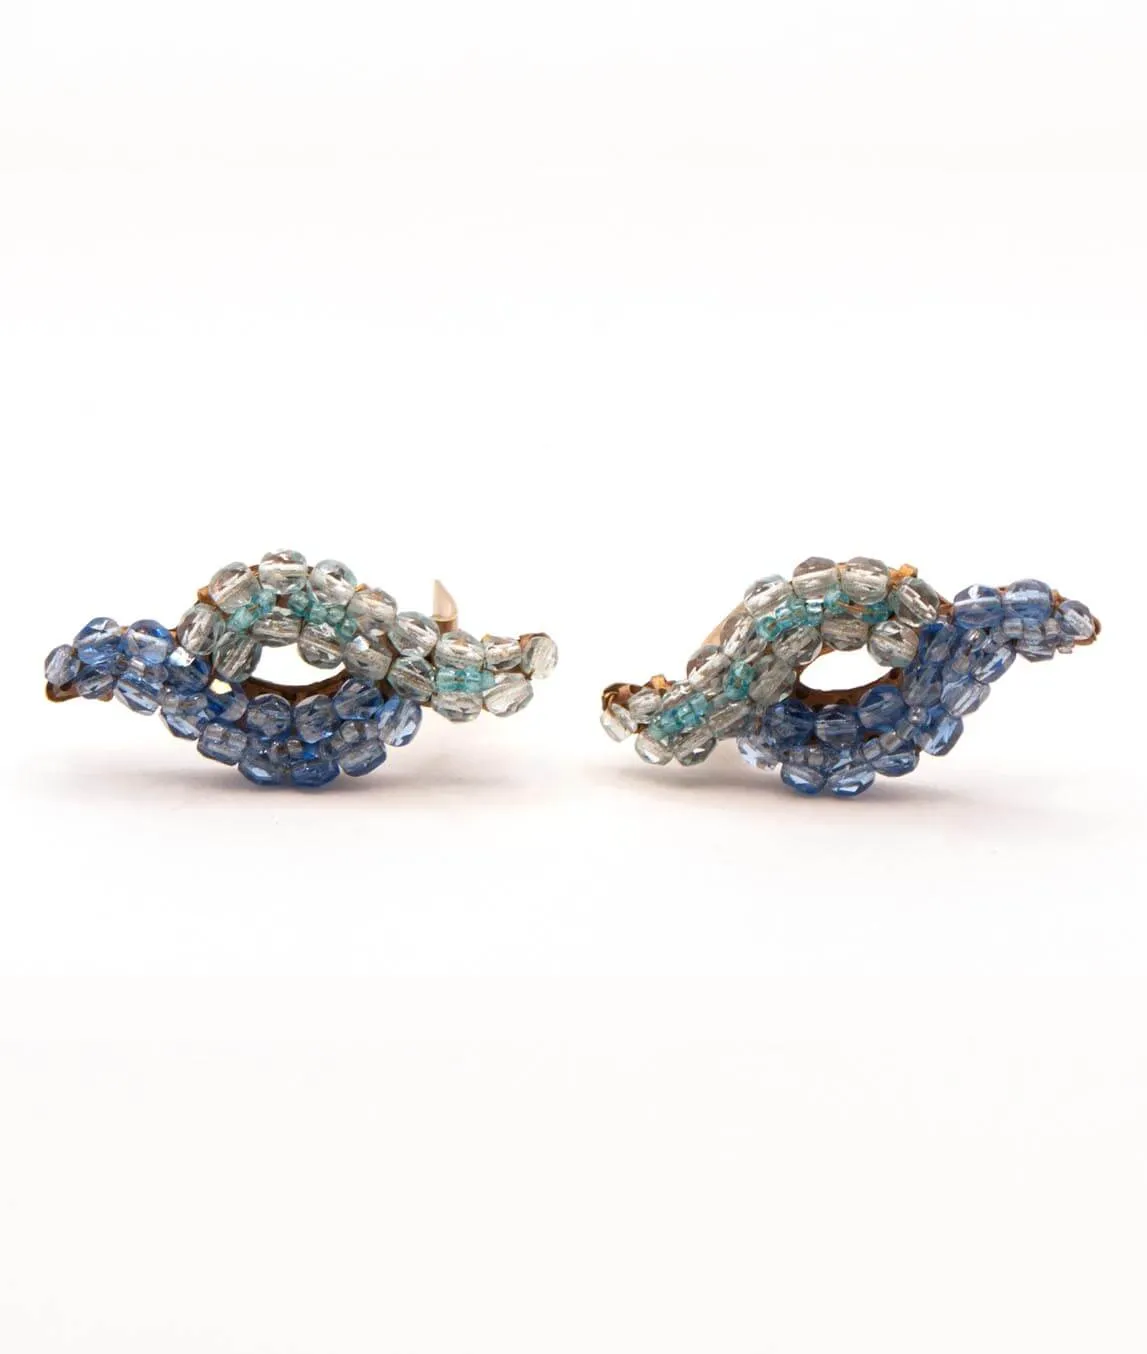 Coppola e Toppo beaded earrings blue, clear and aqua crystal beads